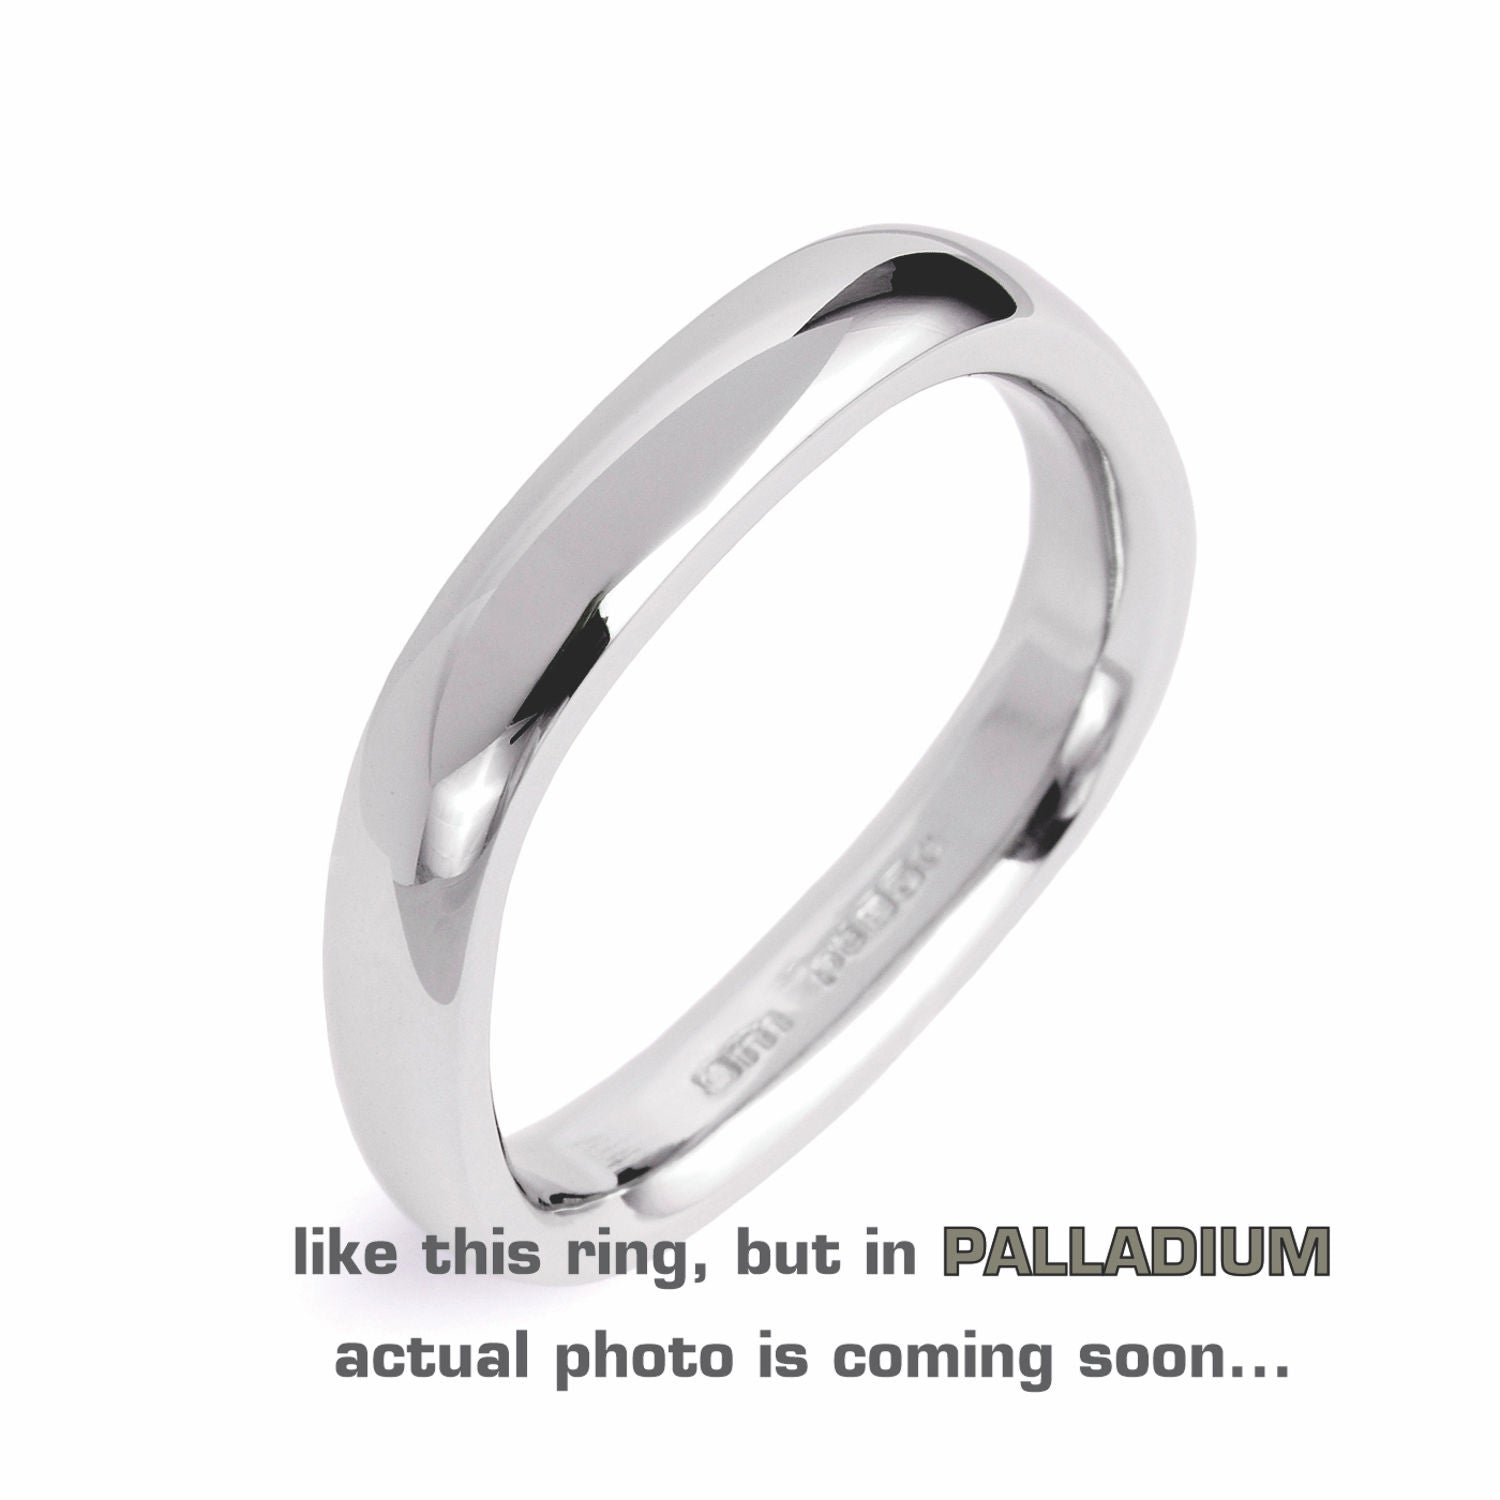 Roberto Cavalli Men's Palladium Podium Antique Metal Ring, Size 16  ING535-AM001-00251 - Jewelry, Mens Jewelry - Jomashop